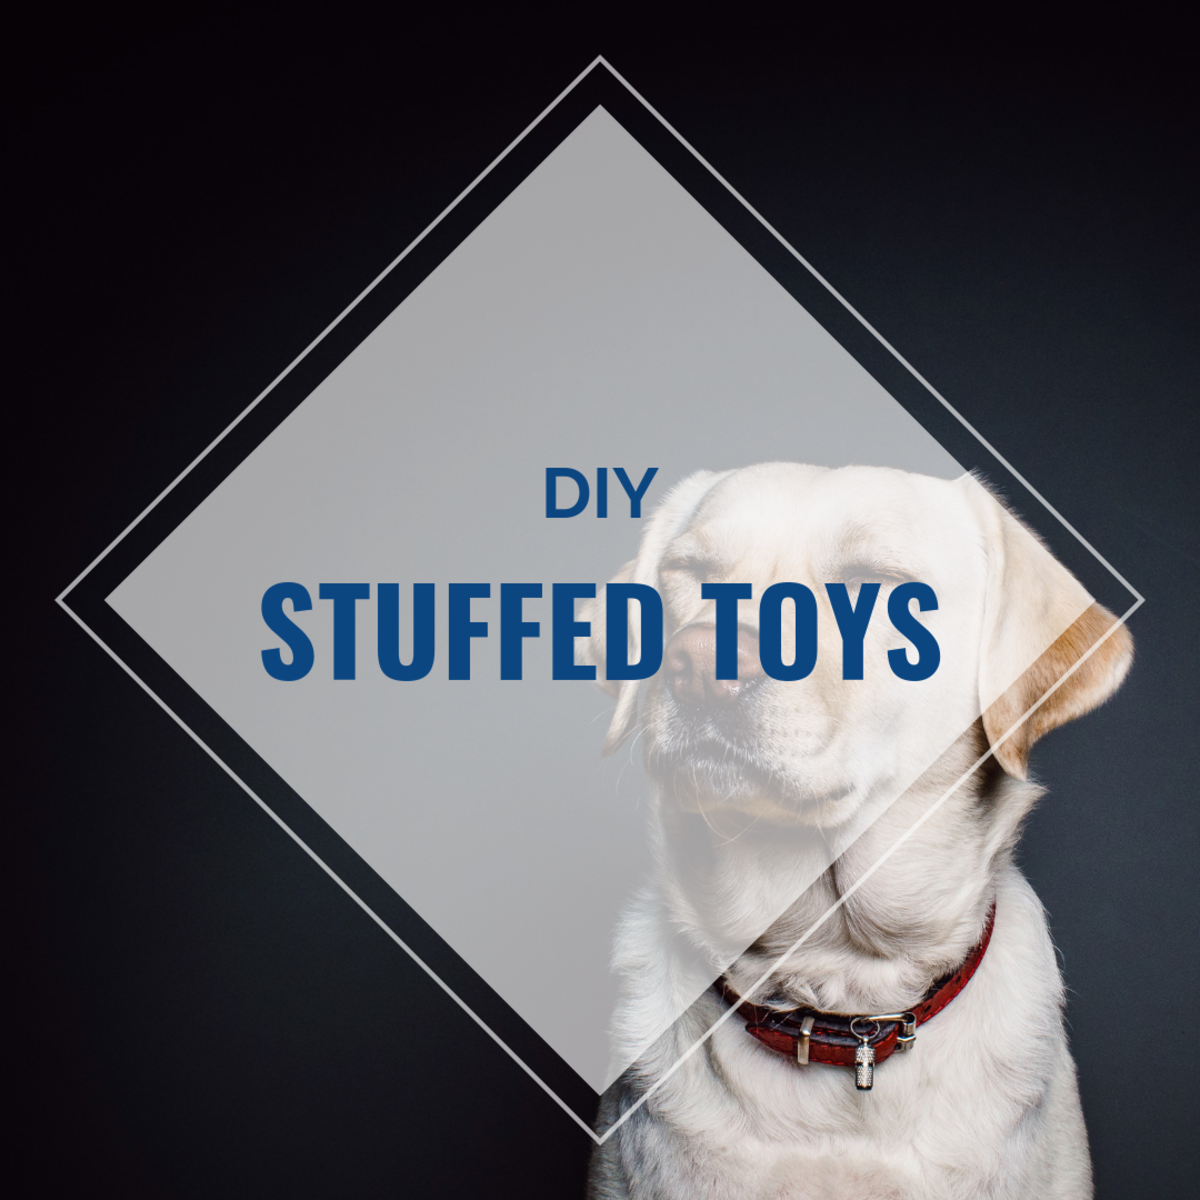 DIY Stuffed Toys